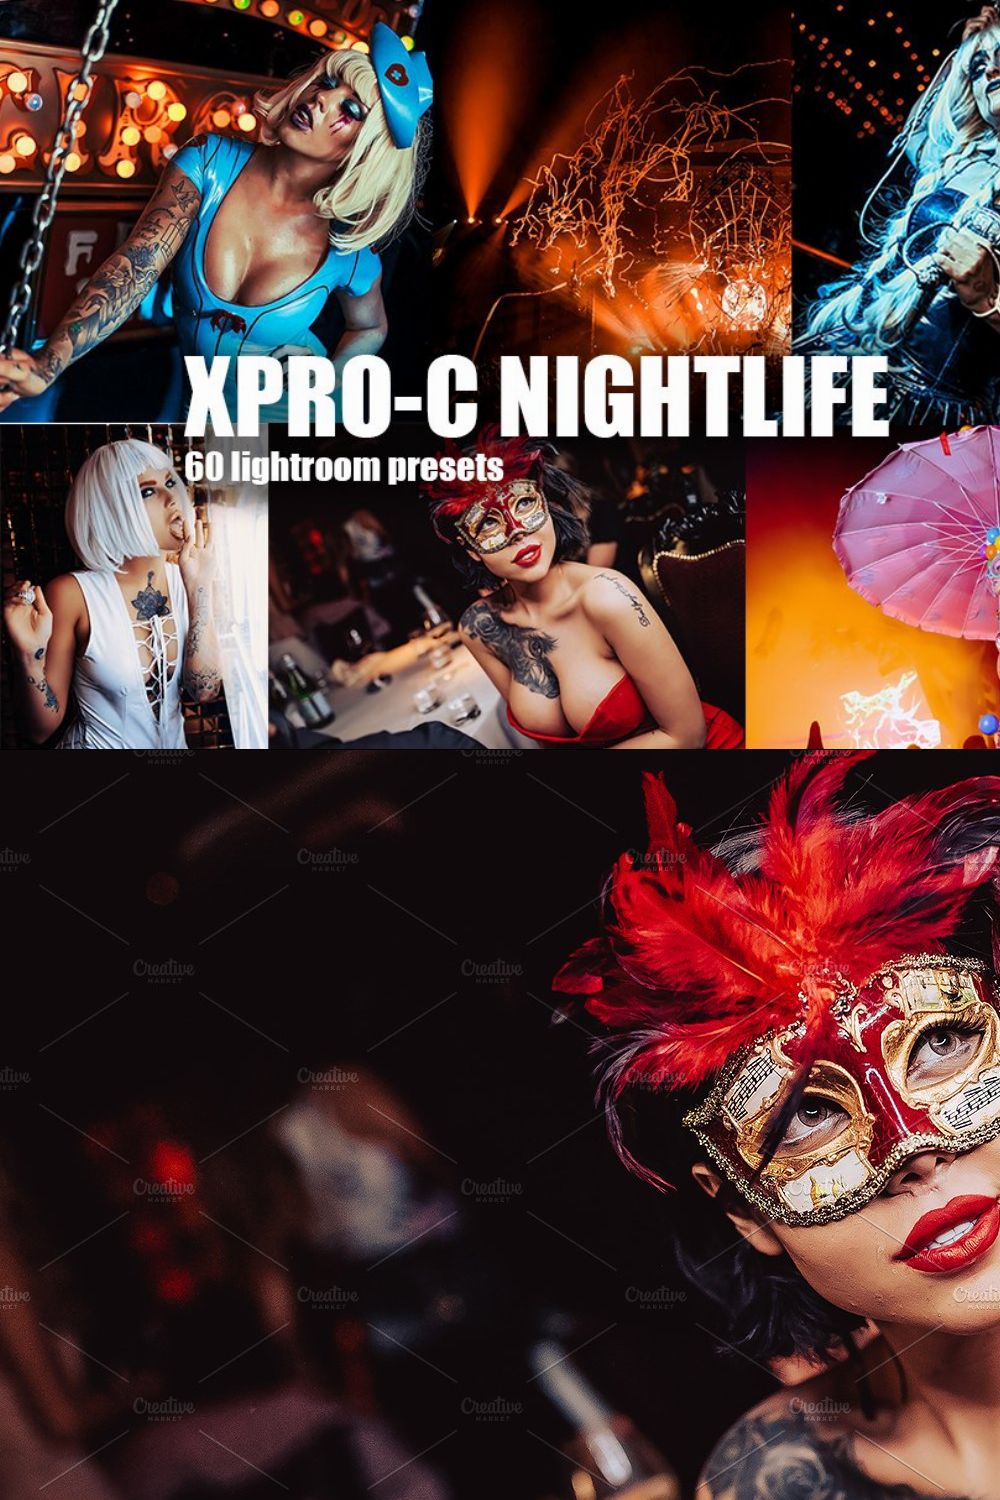 Xpro Nightlife Lightroom presets pinterest preview image.